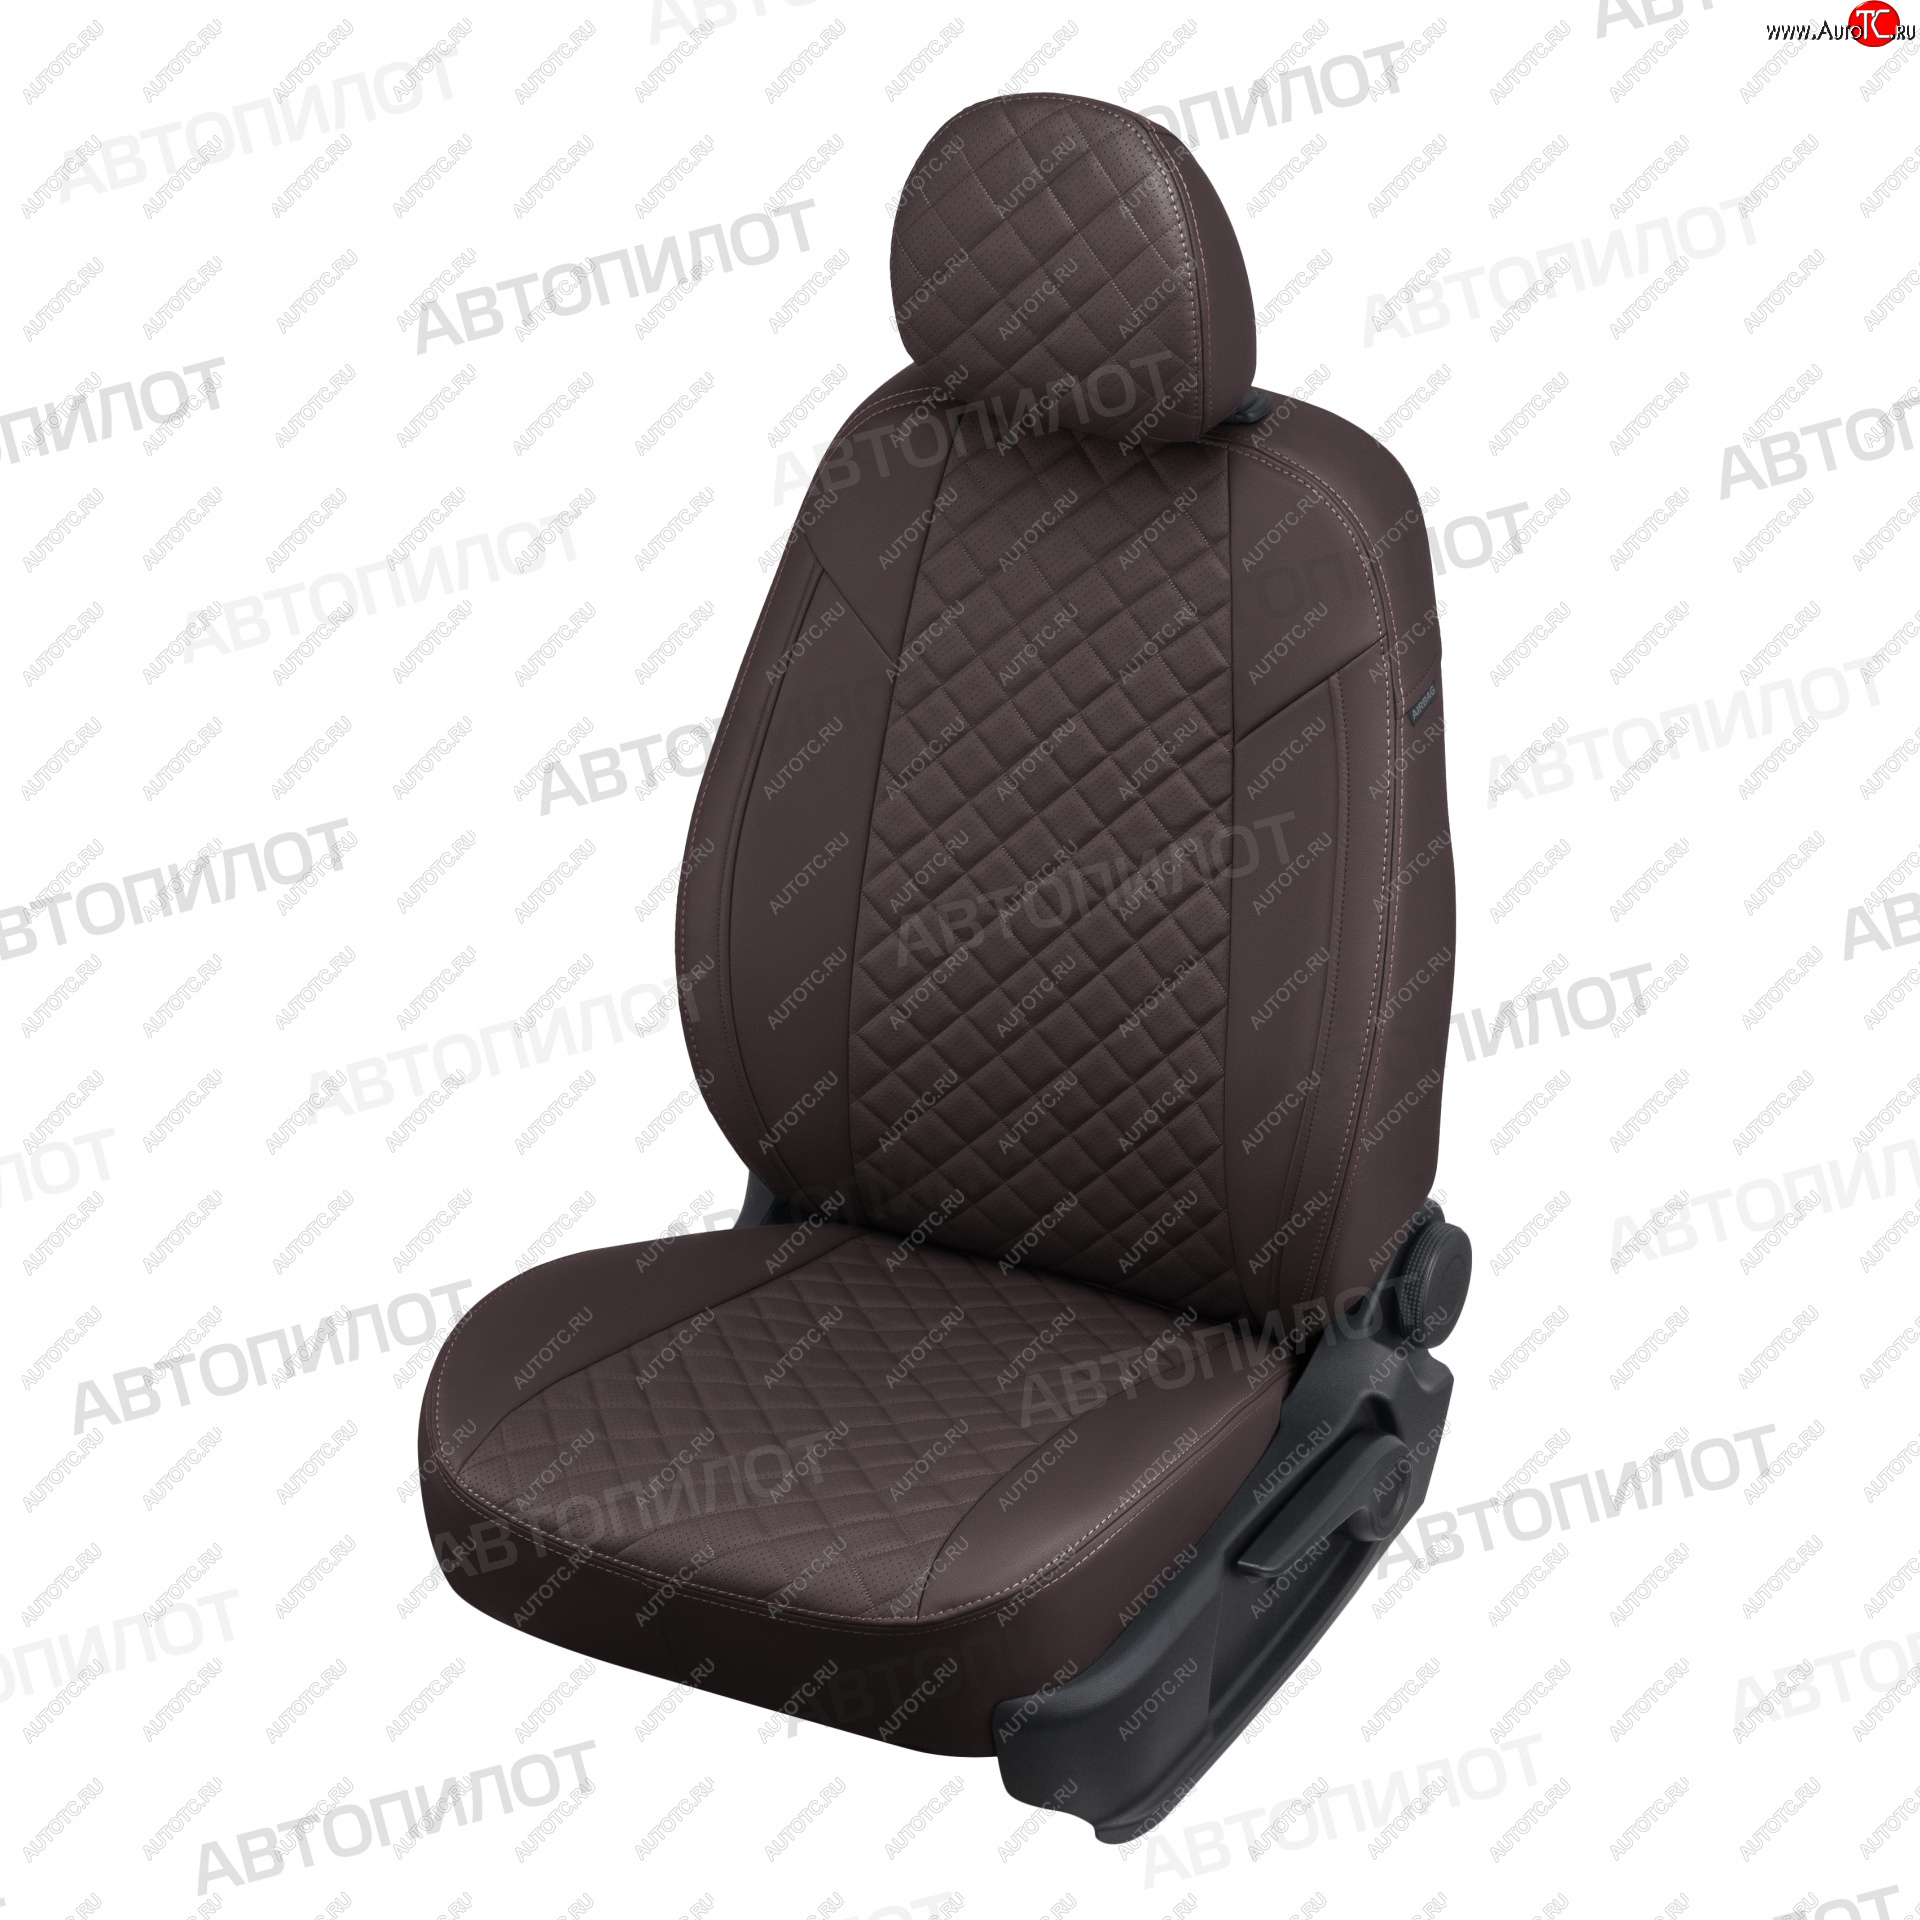 14 499 р. Чехлы сидений (Titanium, экокожа) Автопилот Ромб  Ford Mondeo (2007-2014) (шоколад)